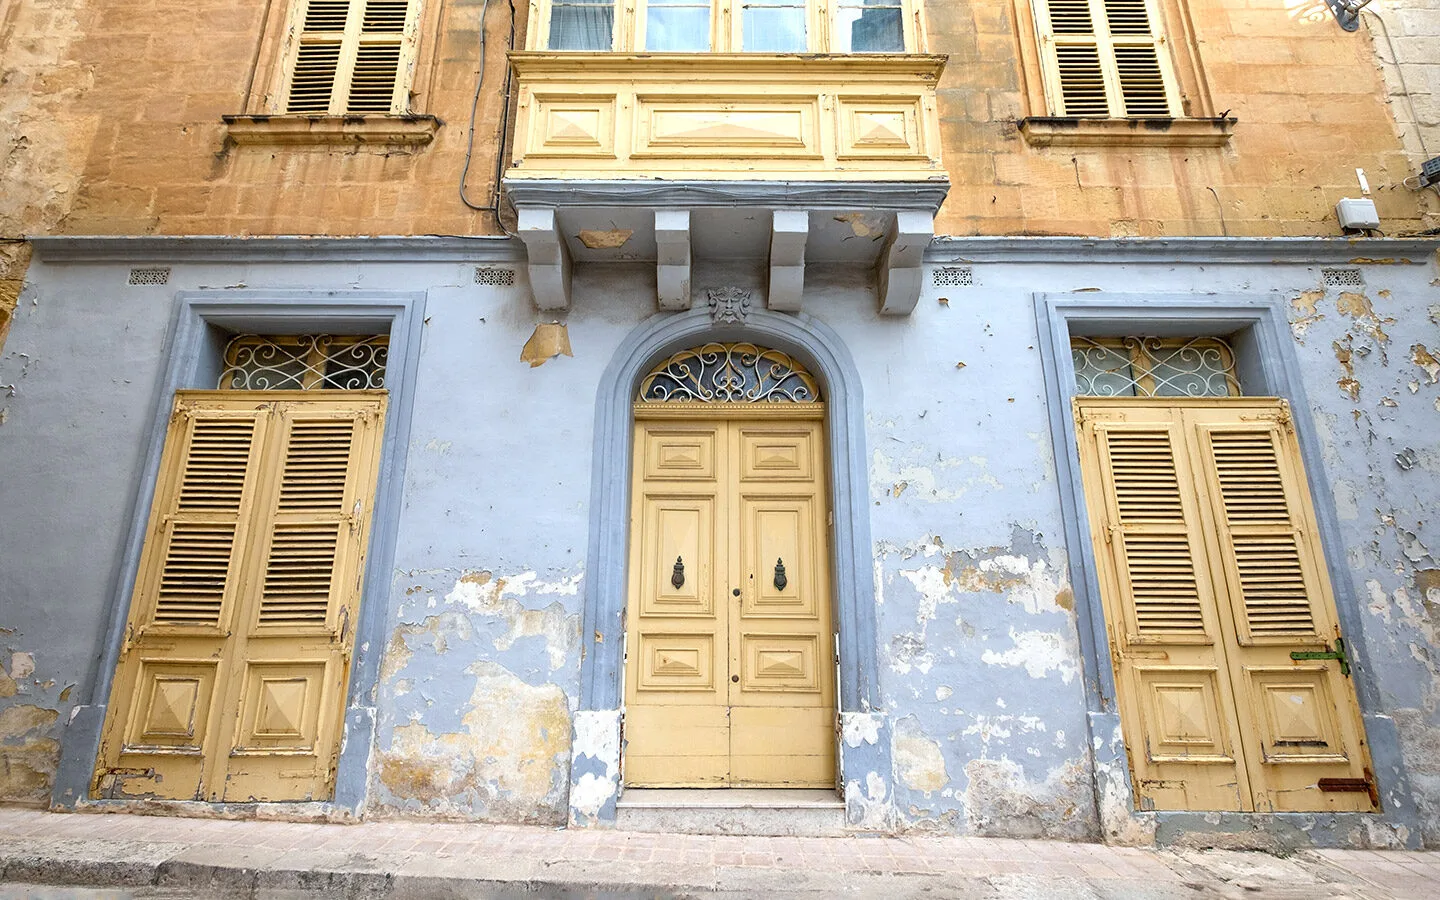 Vintage doors and windows in the Three Cities, Malta